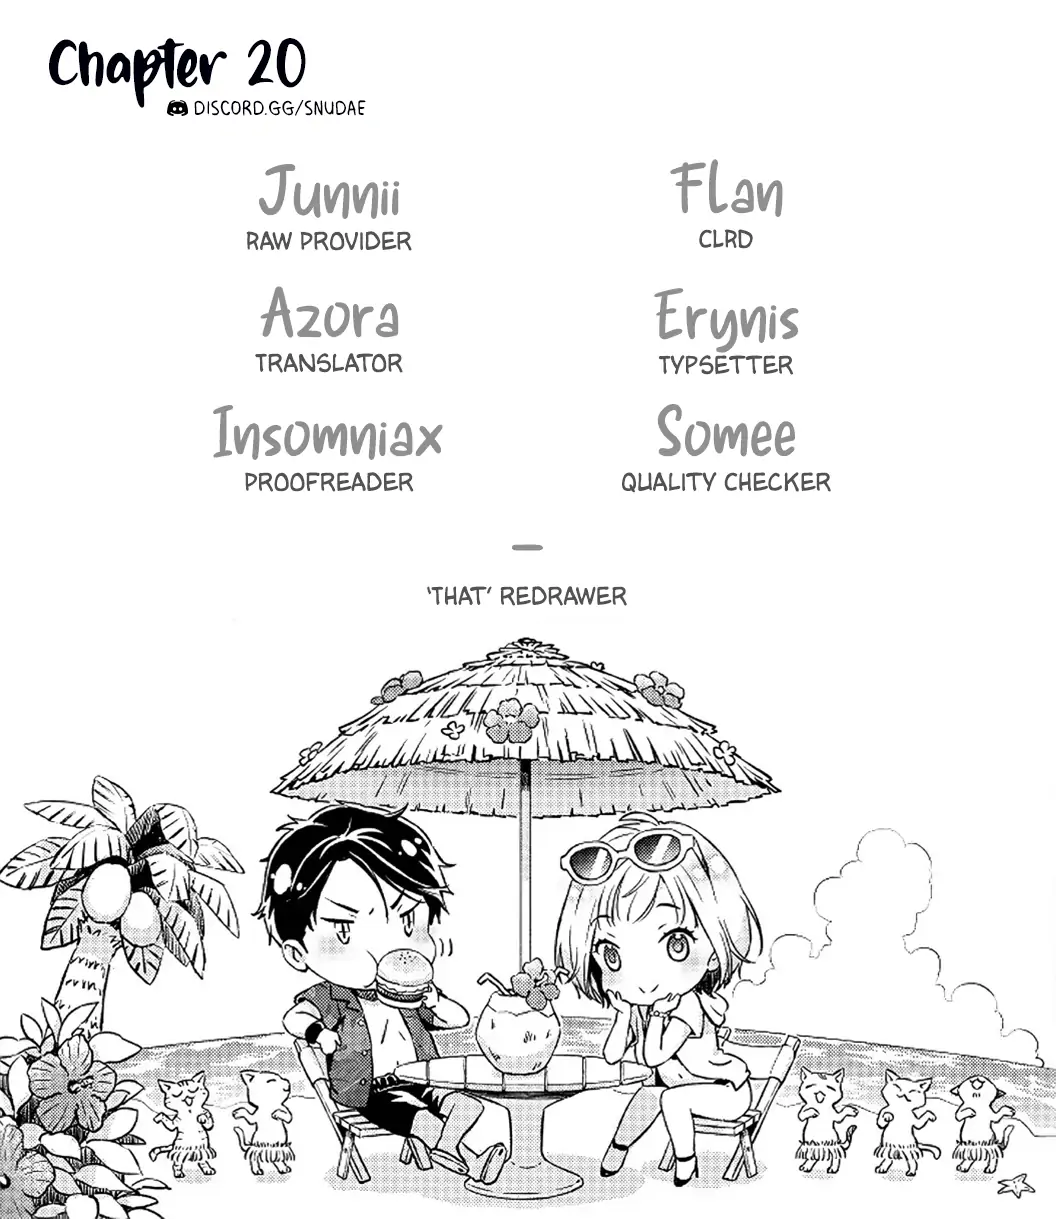 Read 5toubun no Hanayome Manga English [New Chapters] Online Free -  MangaClash